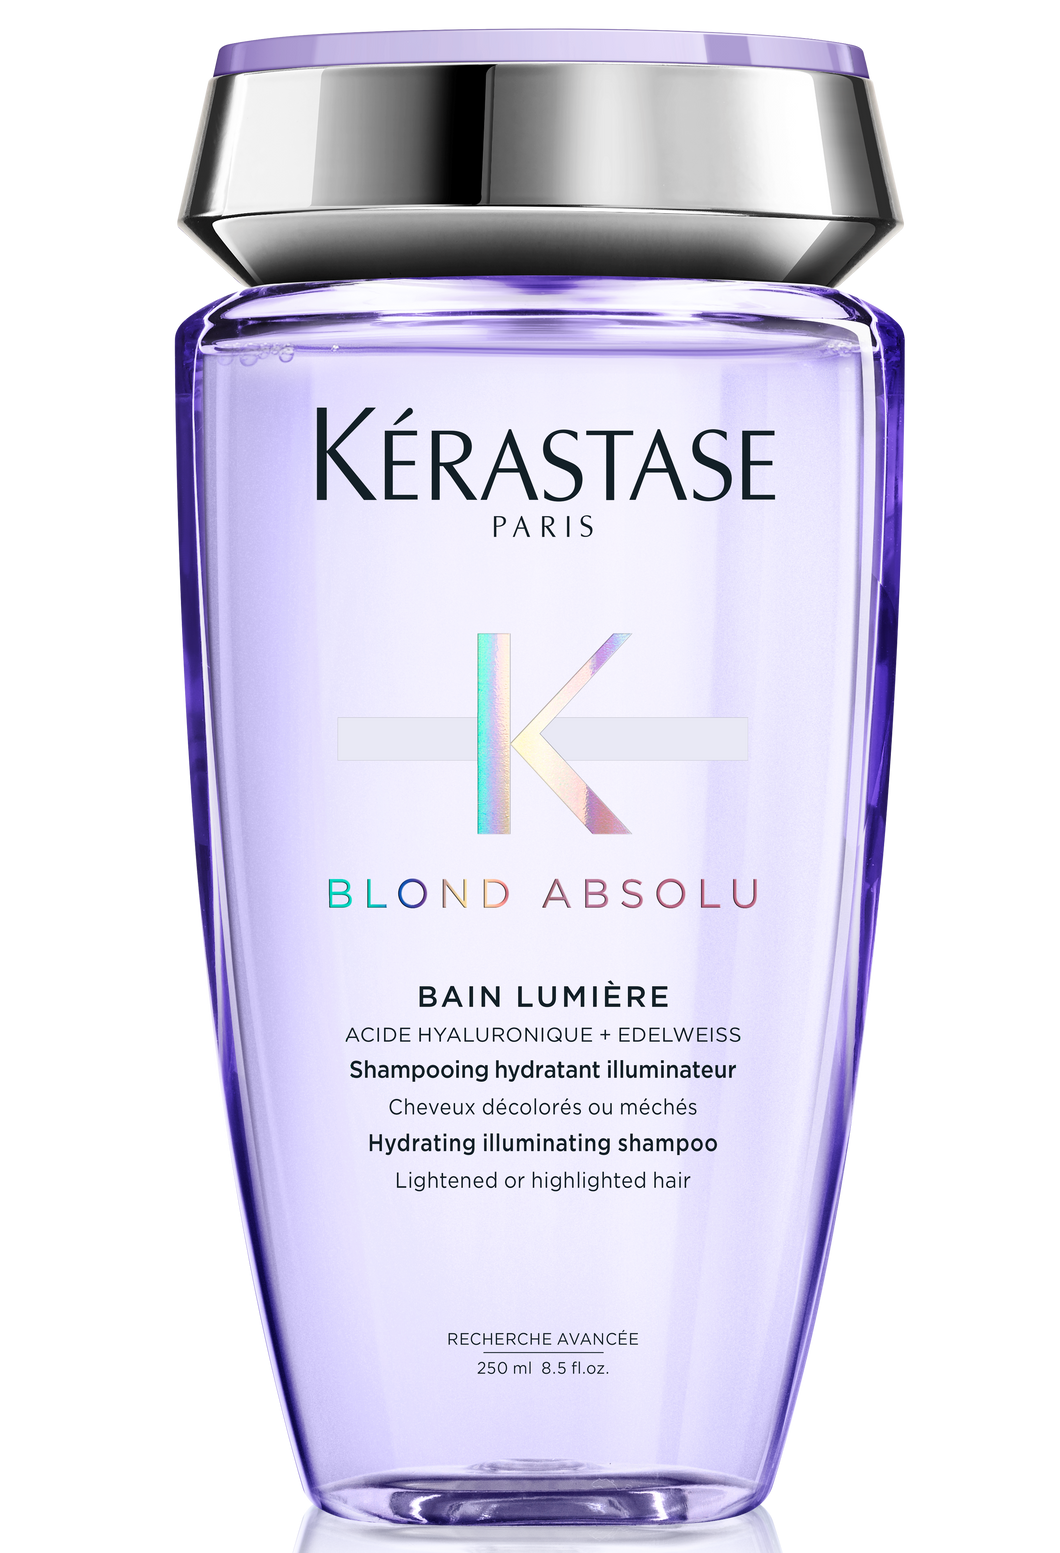 Kérastase - Blond Absolu - Bain Lumière